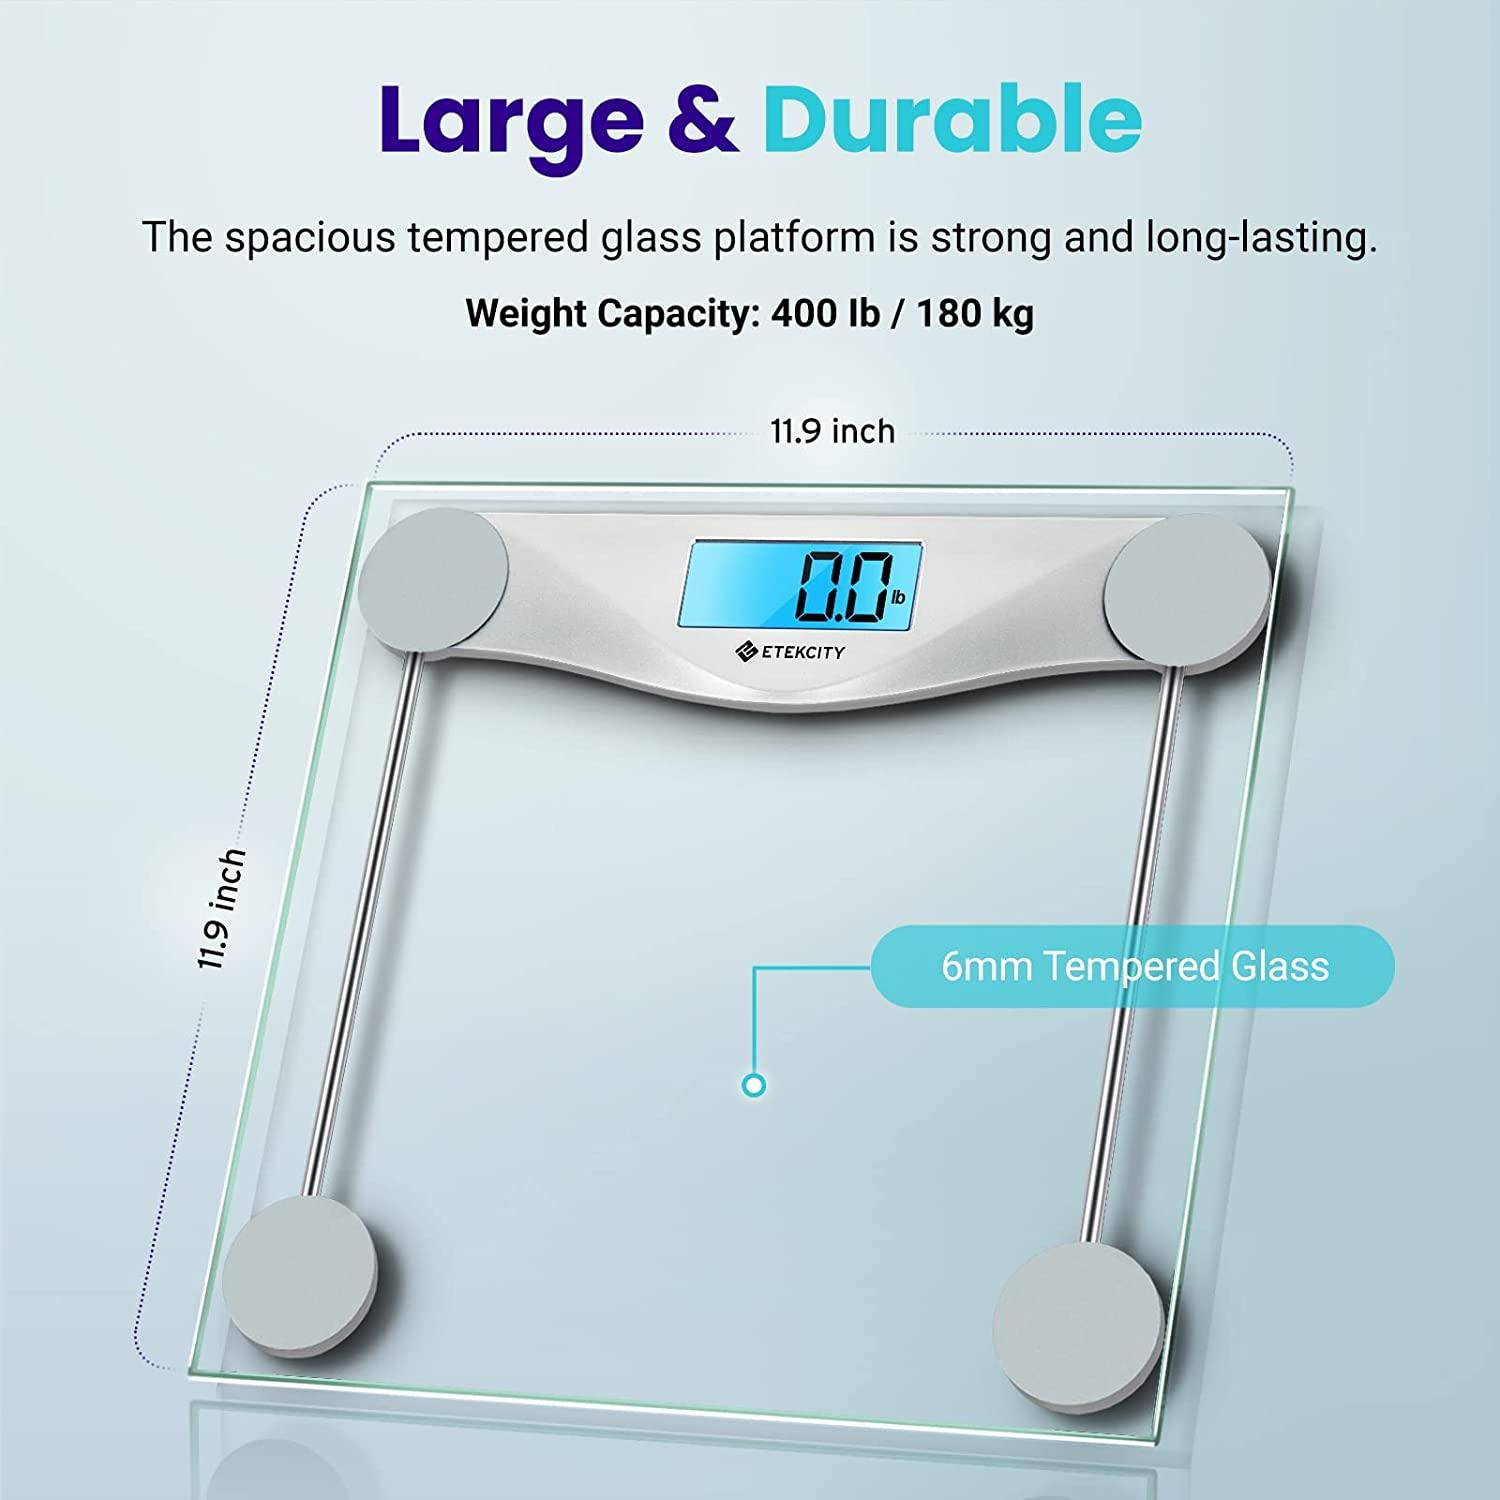 Etekcity Digital Body Weight Bathroom Scale Tempered 400lb Max